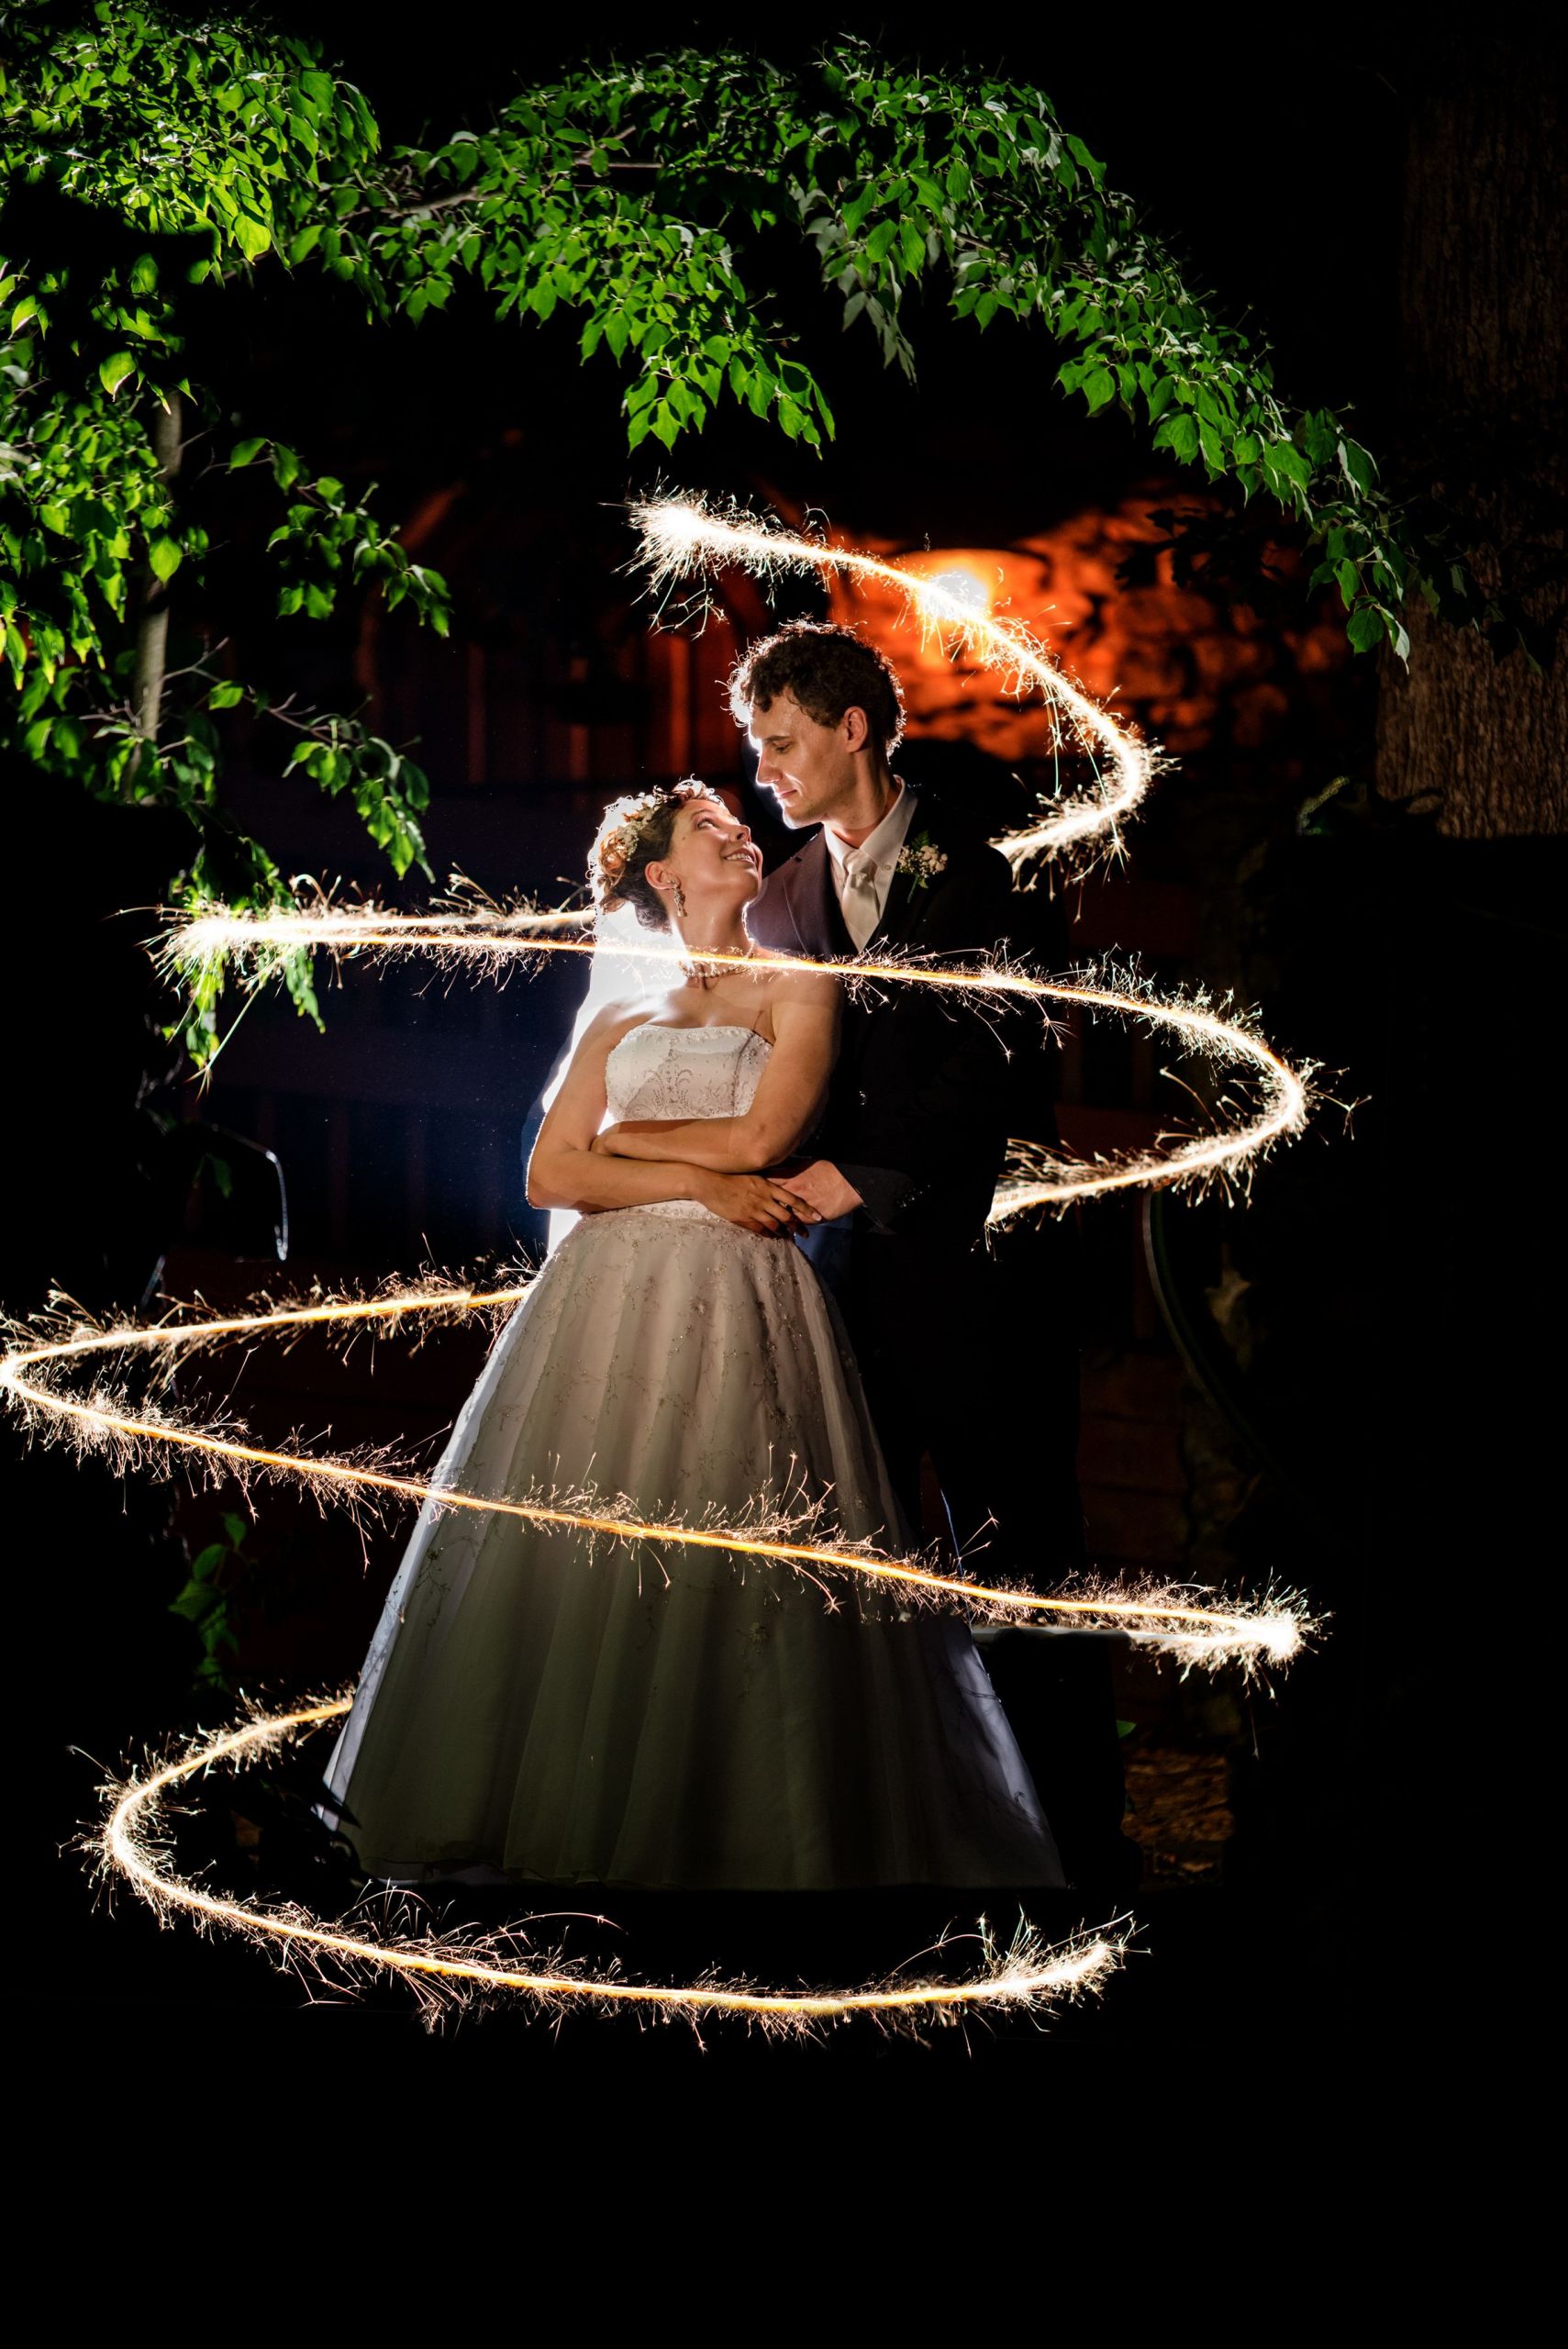 Wedding Sparklers Australia
 Sparkler swirl around bride and groom